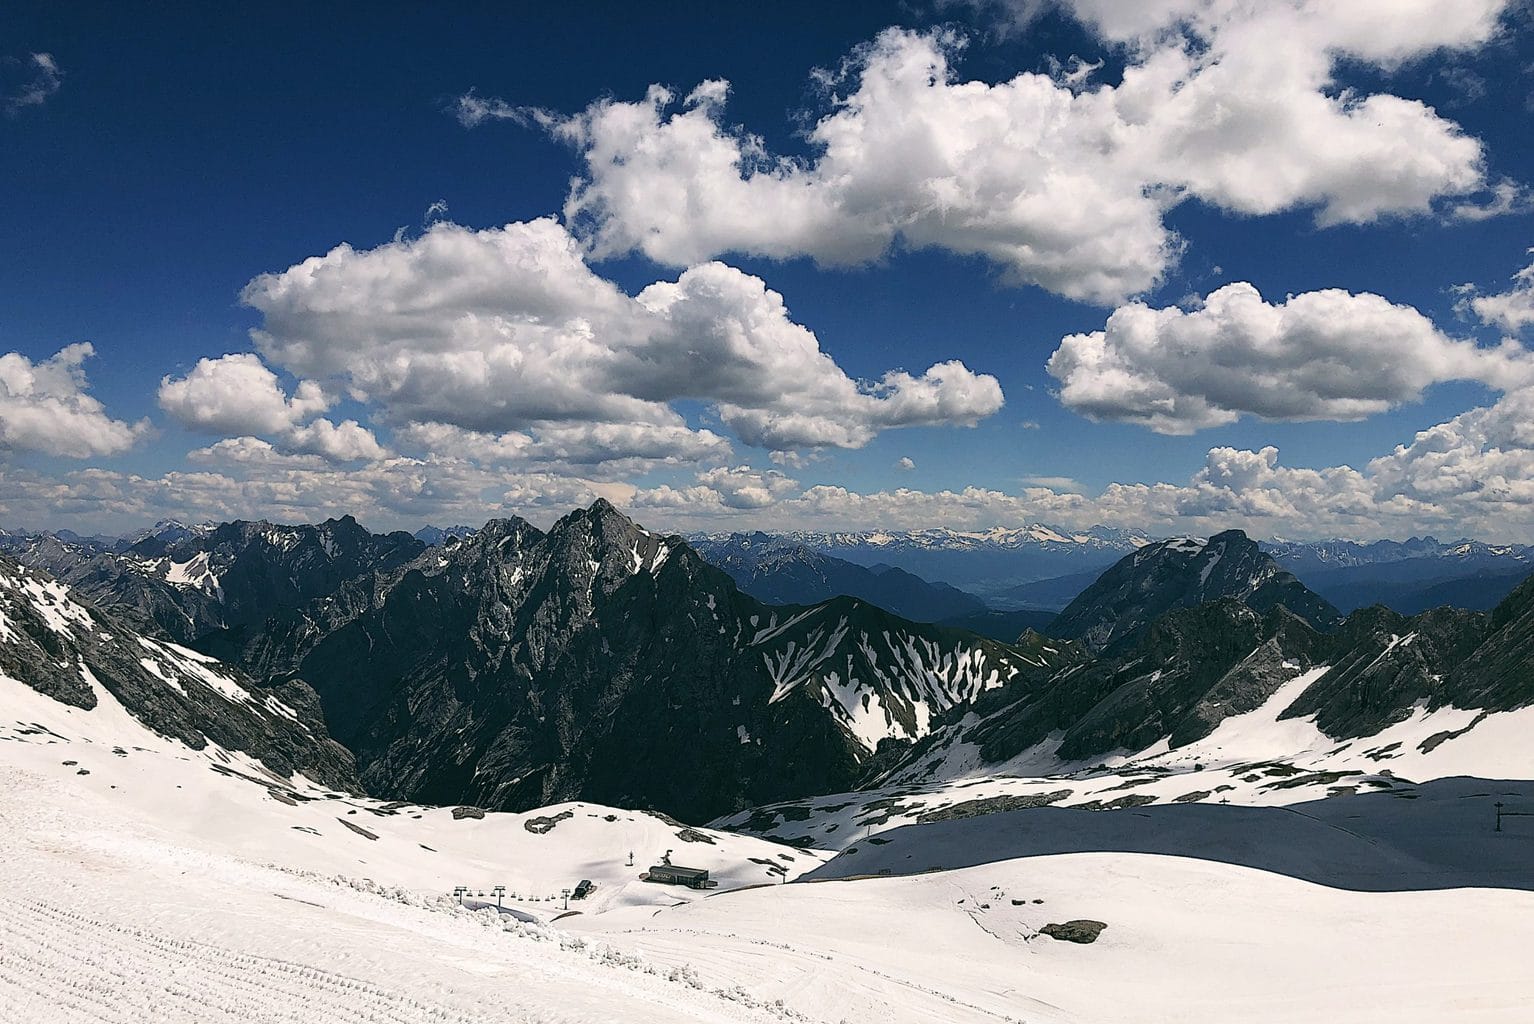 In de Alpen bij Garmisch Partenkirchen kun je skieën ondanks corona